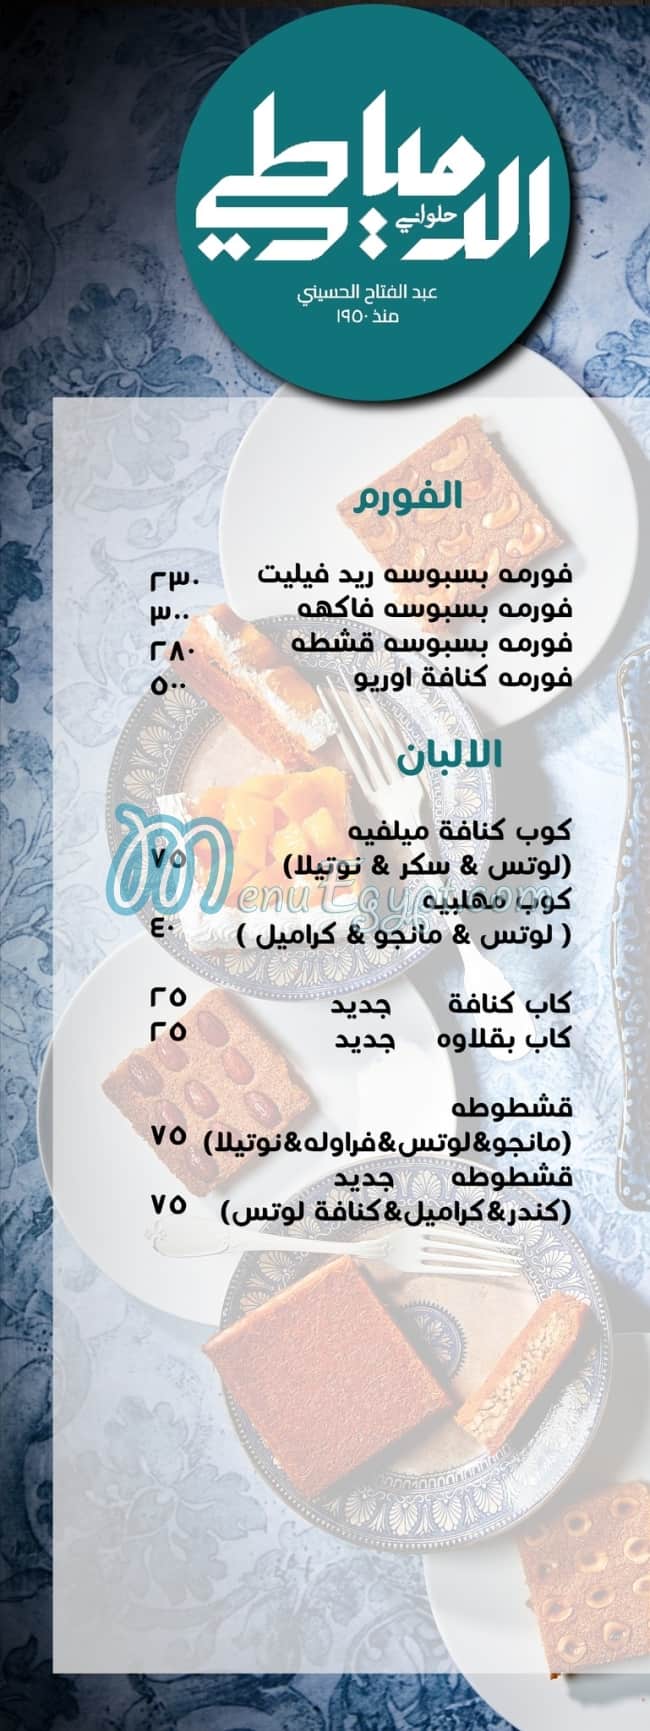 El Domiaty menu Egypt 2